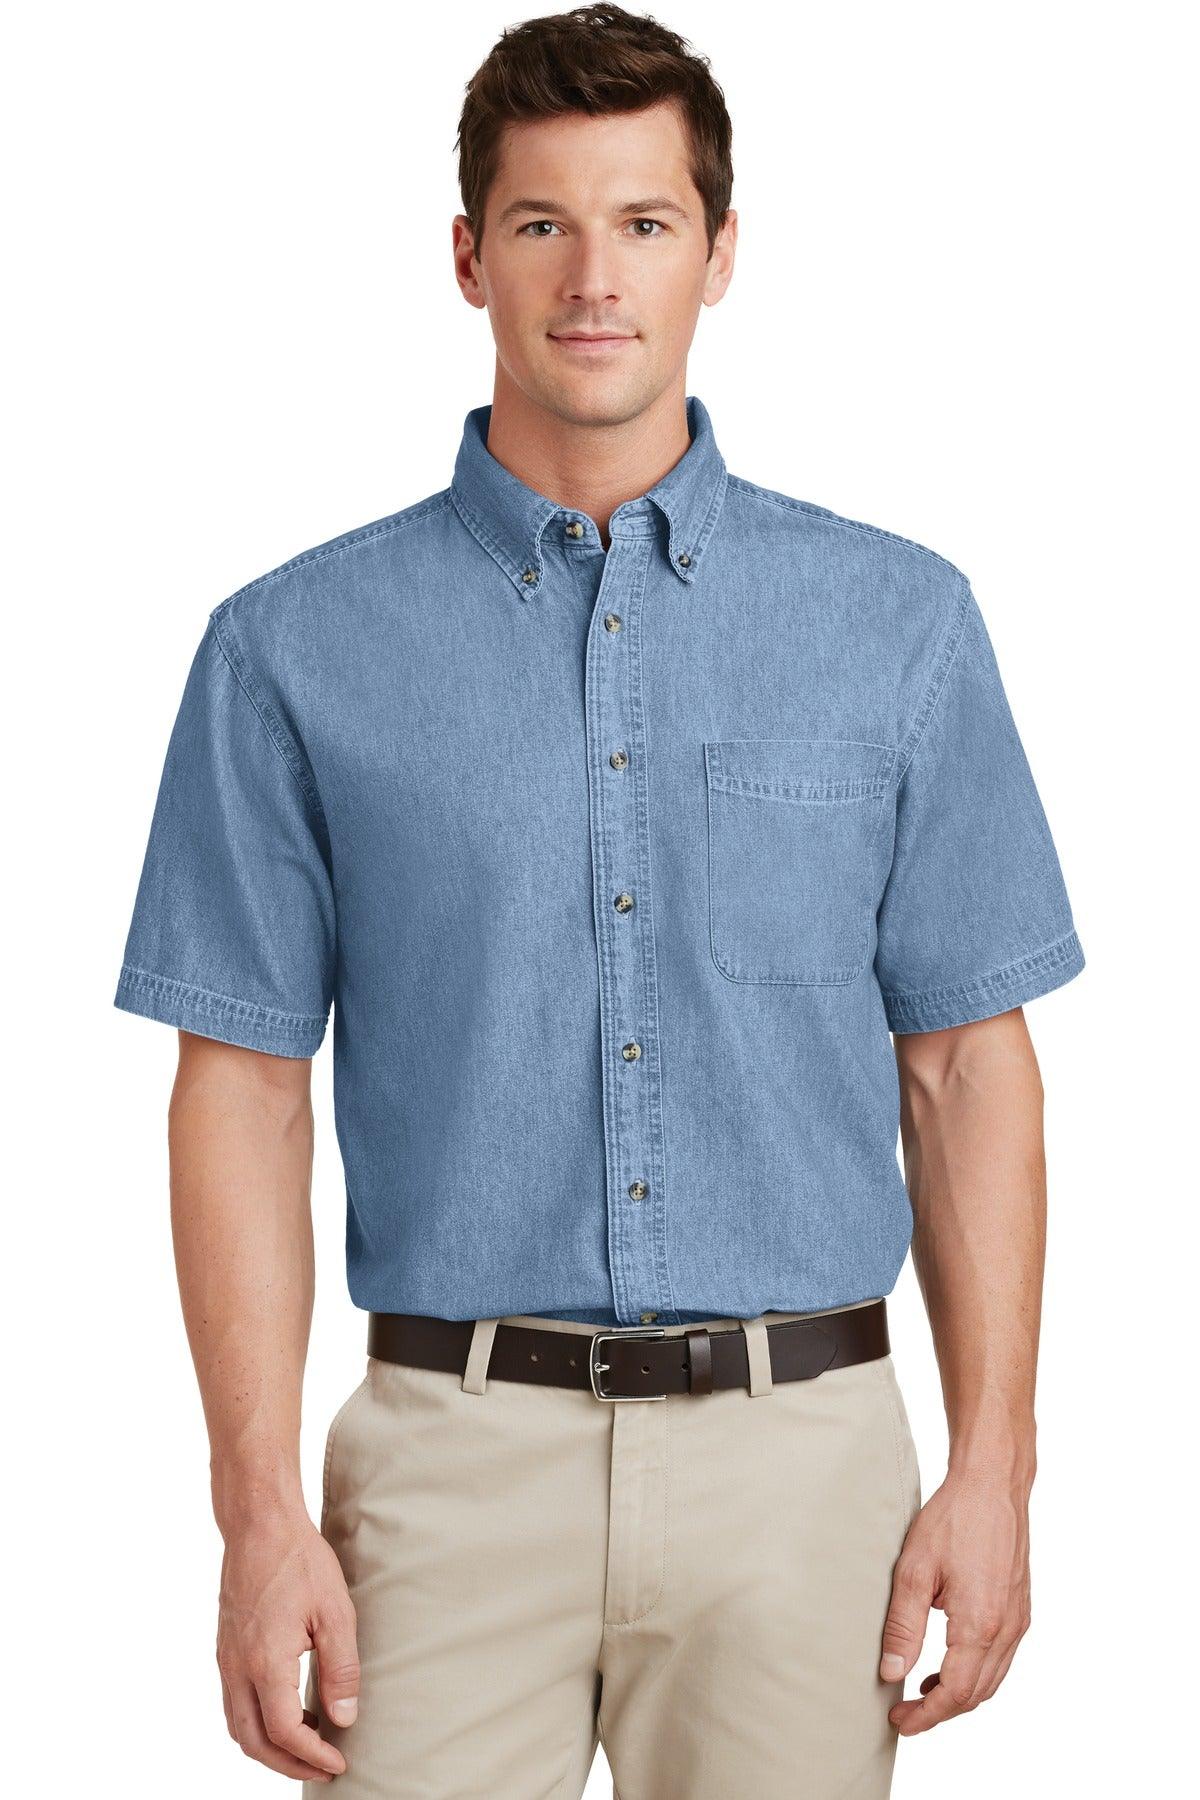 Port & Company - Short Sleeve Value Denim Shirt. SP11 - Dresses Max